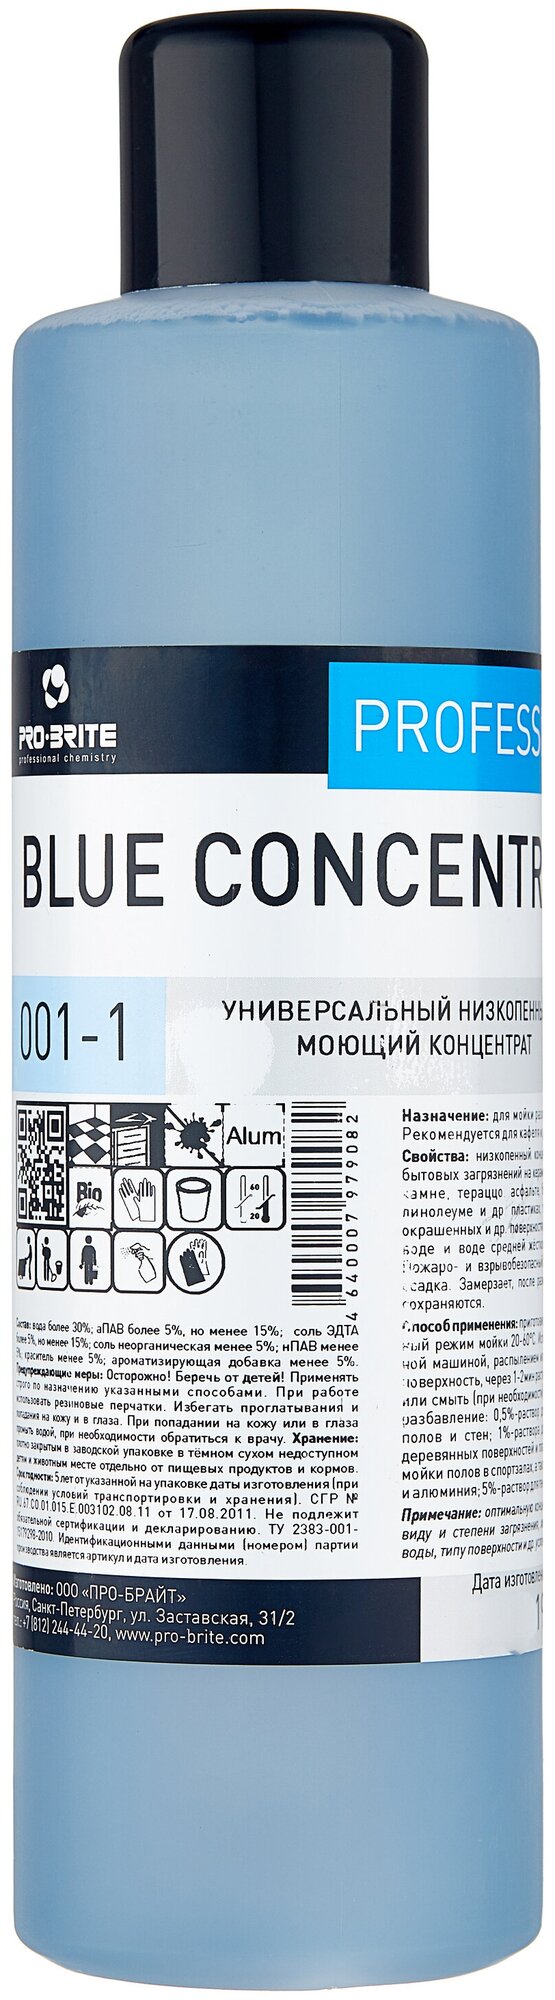 PRO-BRITE BLUE CONCENTRATE.        .  11. 1